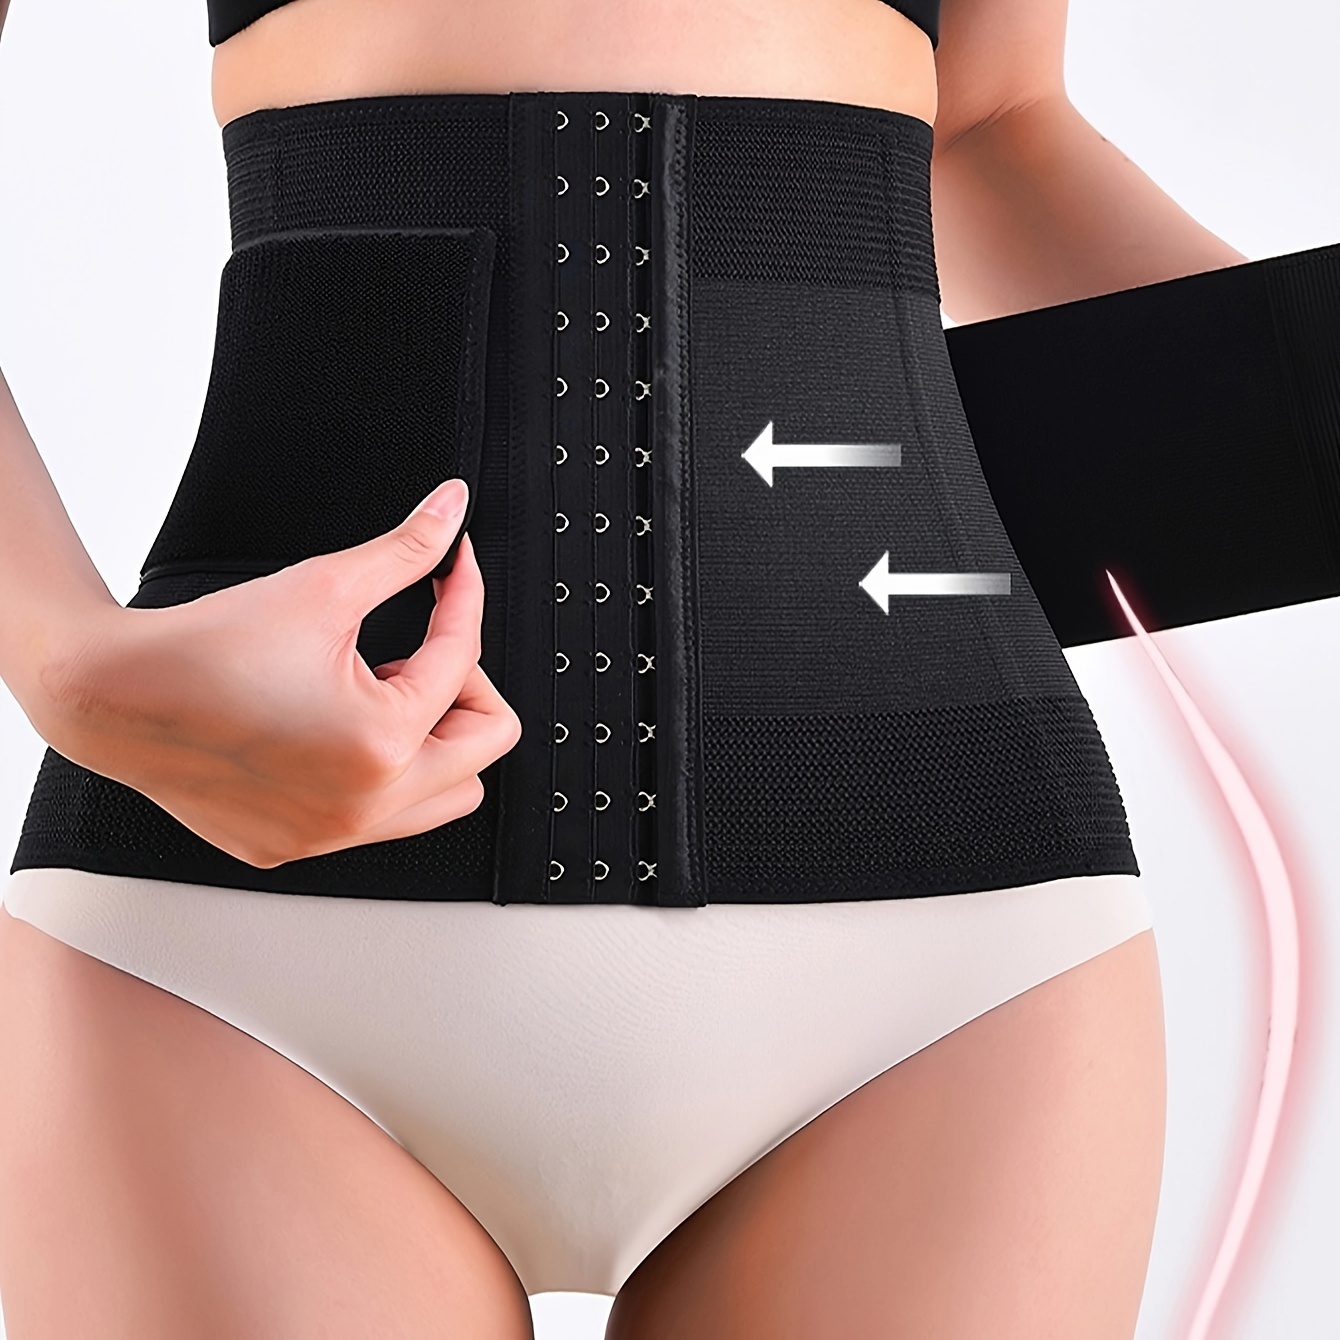 Slimming Tummy Control Waist Trainer Wrap - Black